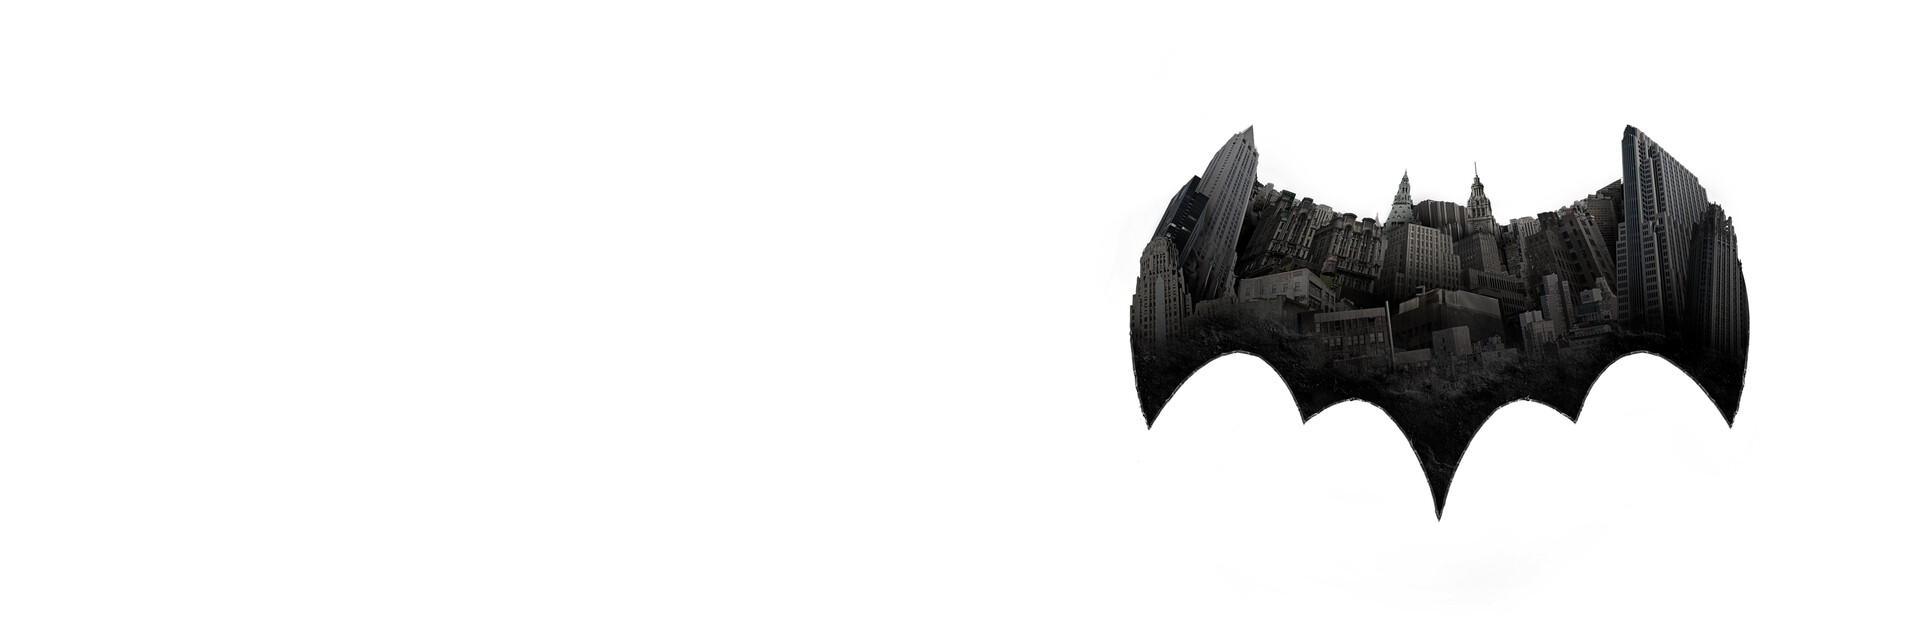 Batman - The Telltale Series cover image